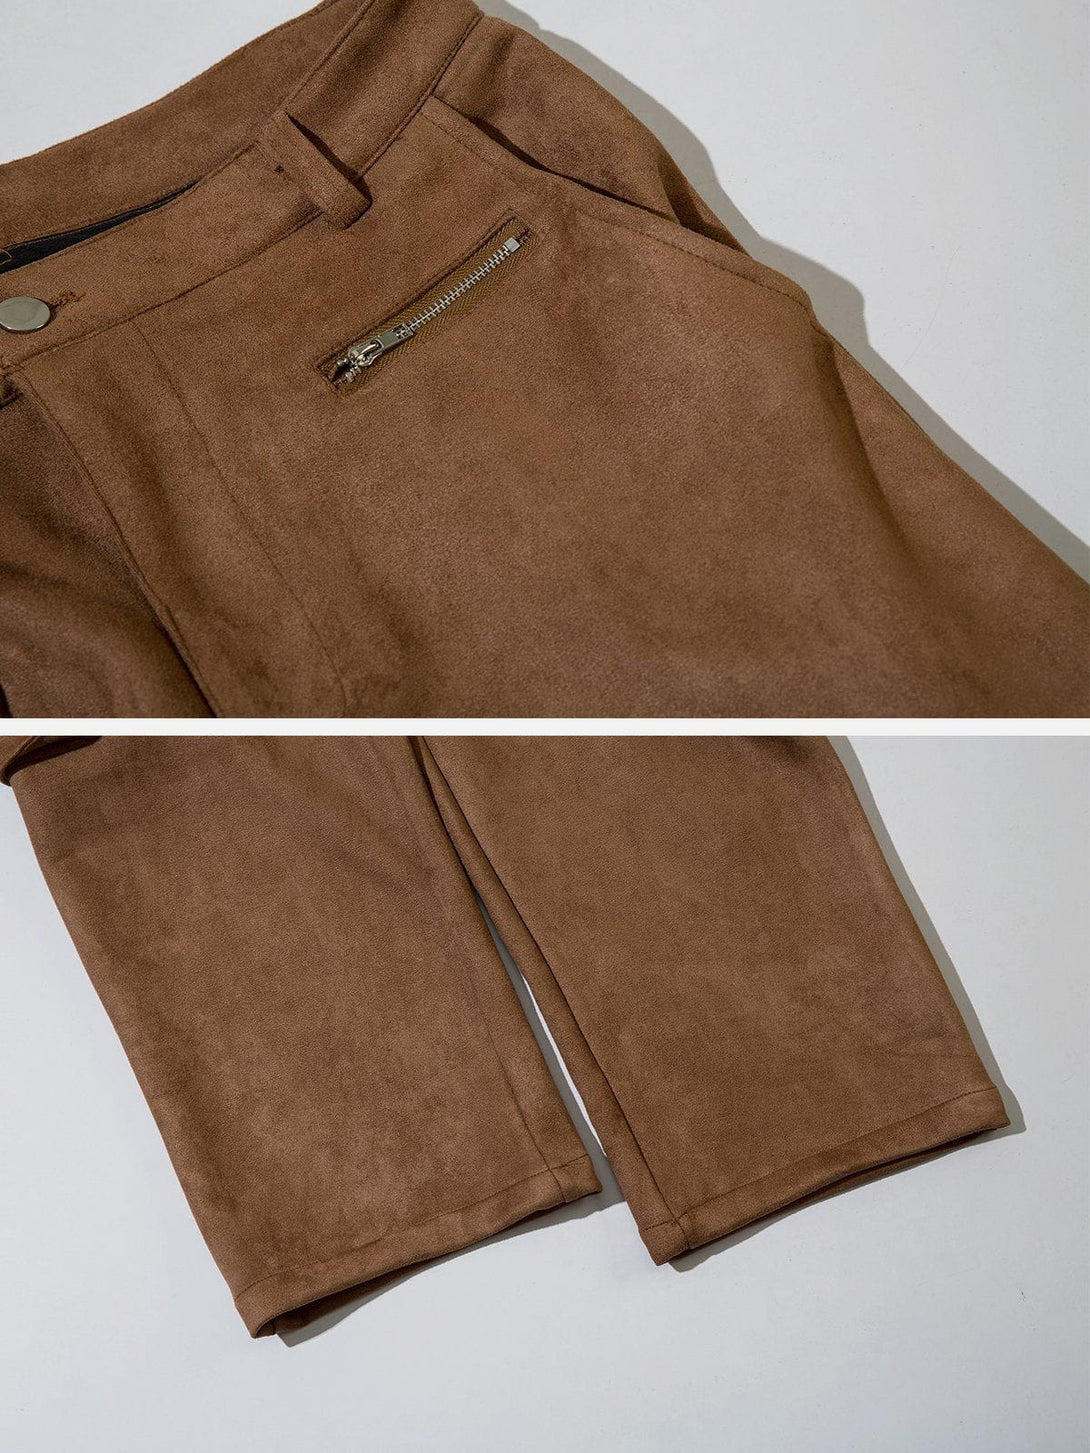 Majesda® - Multi-Pocket Suede Pants outfit ideas streetwear fashion